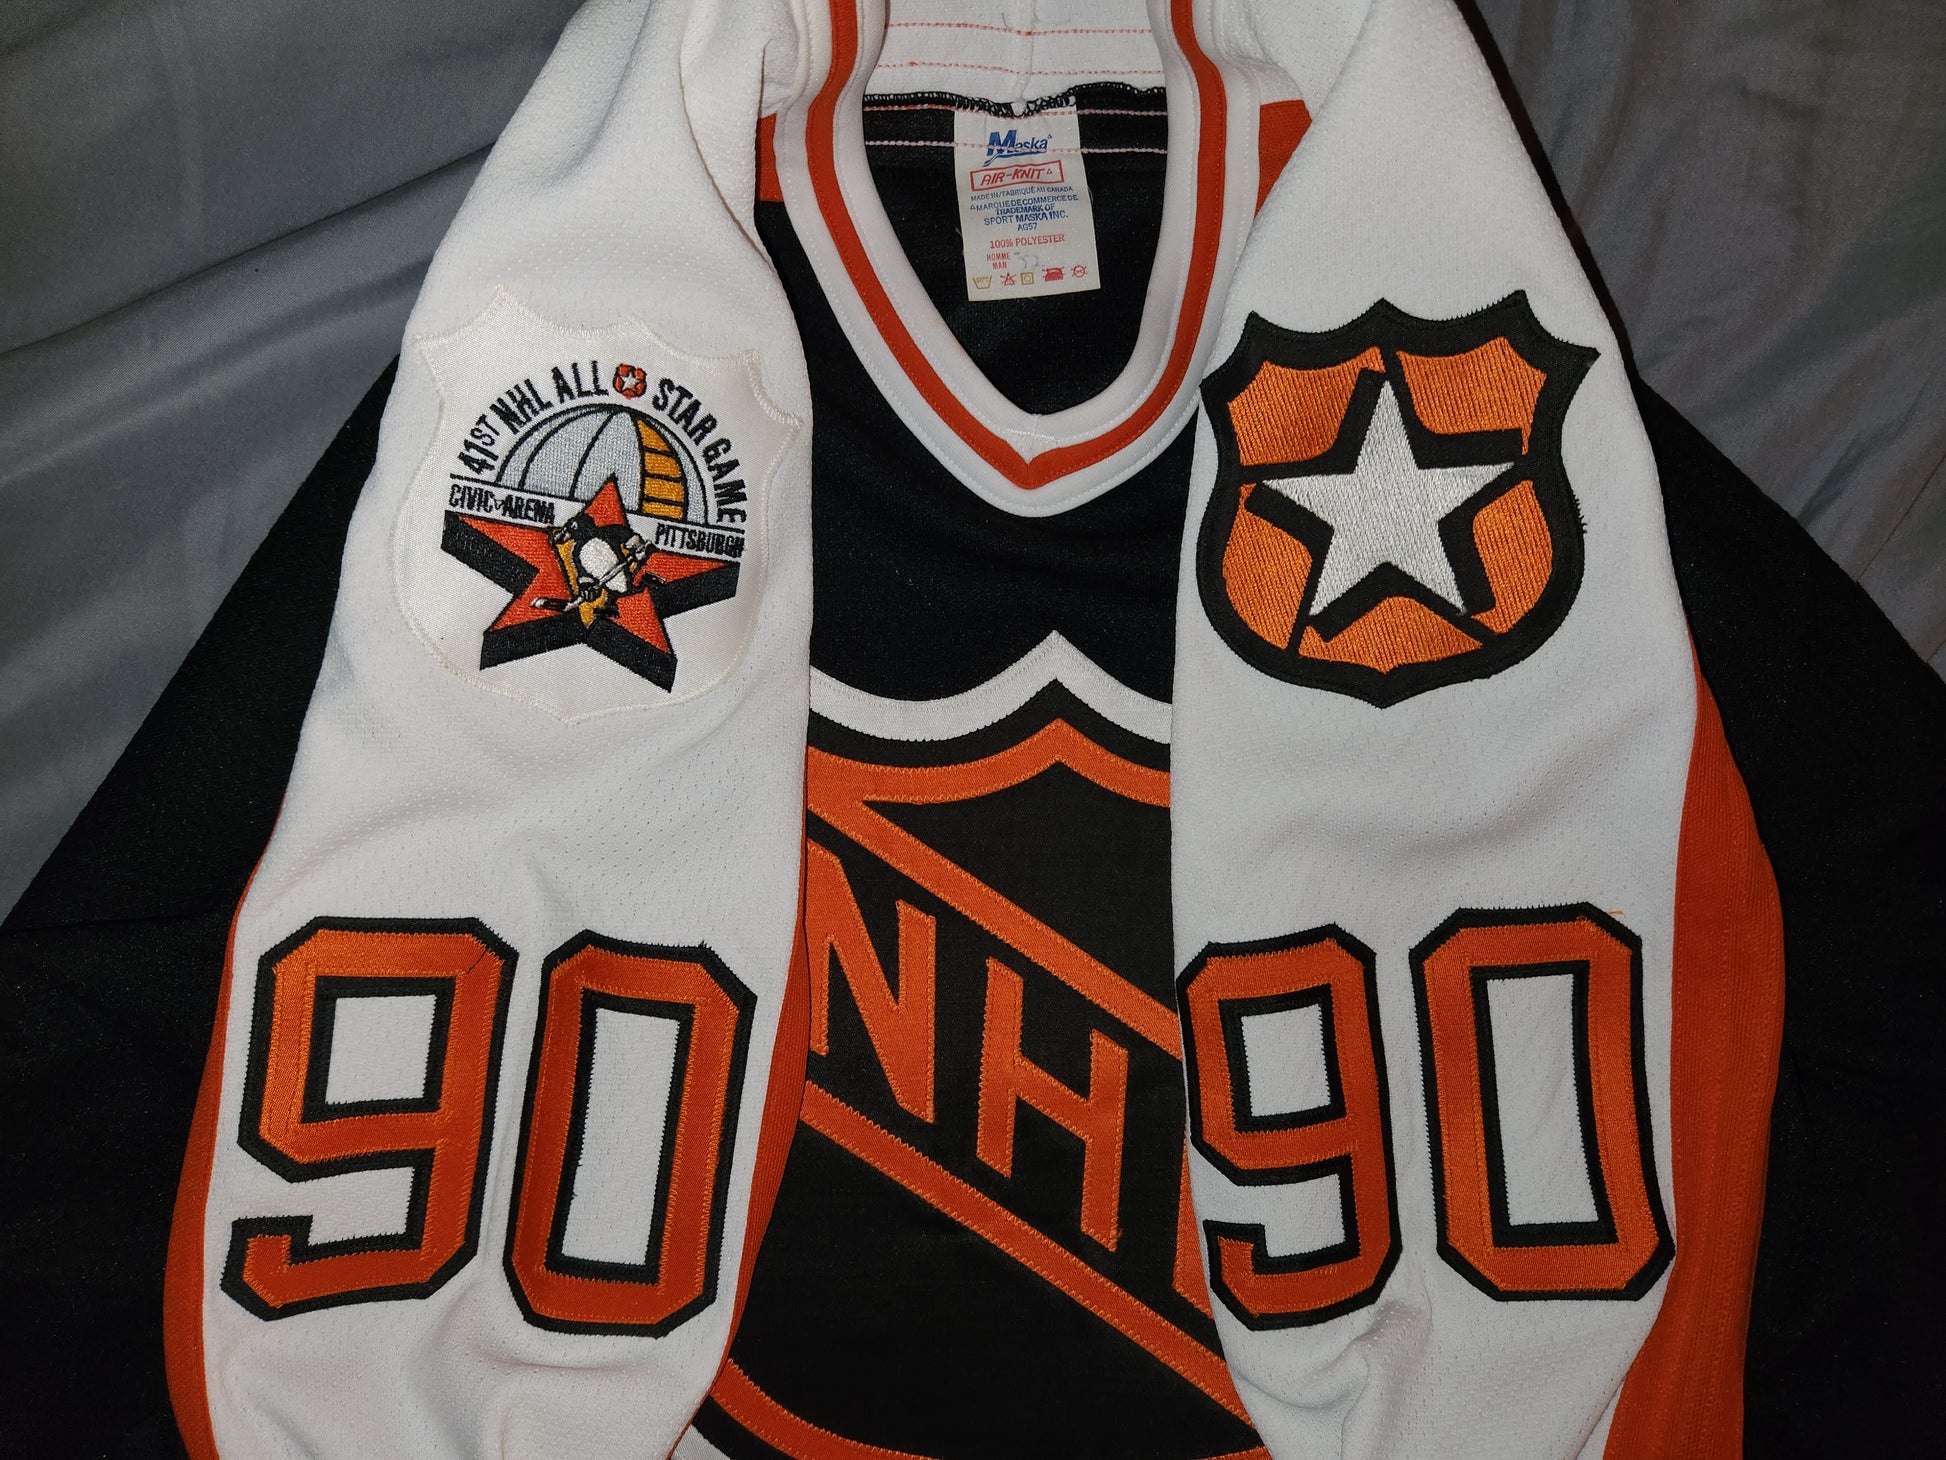 ALEX TREBEK 90 NHL ALL STAR GAME PITTSBURGH 1990 AUTHENTIC CCM HOCKEY –  DSPthrift